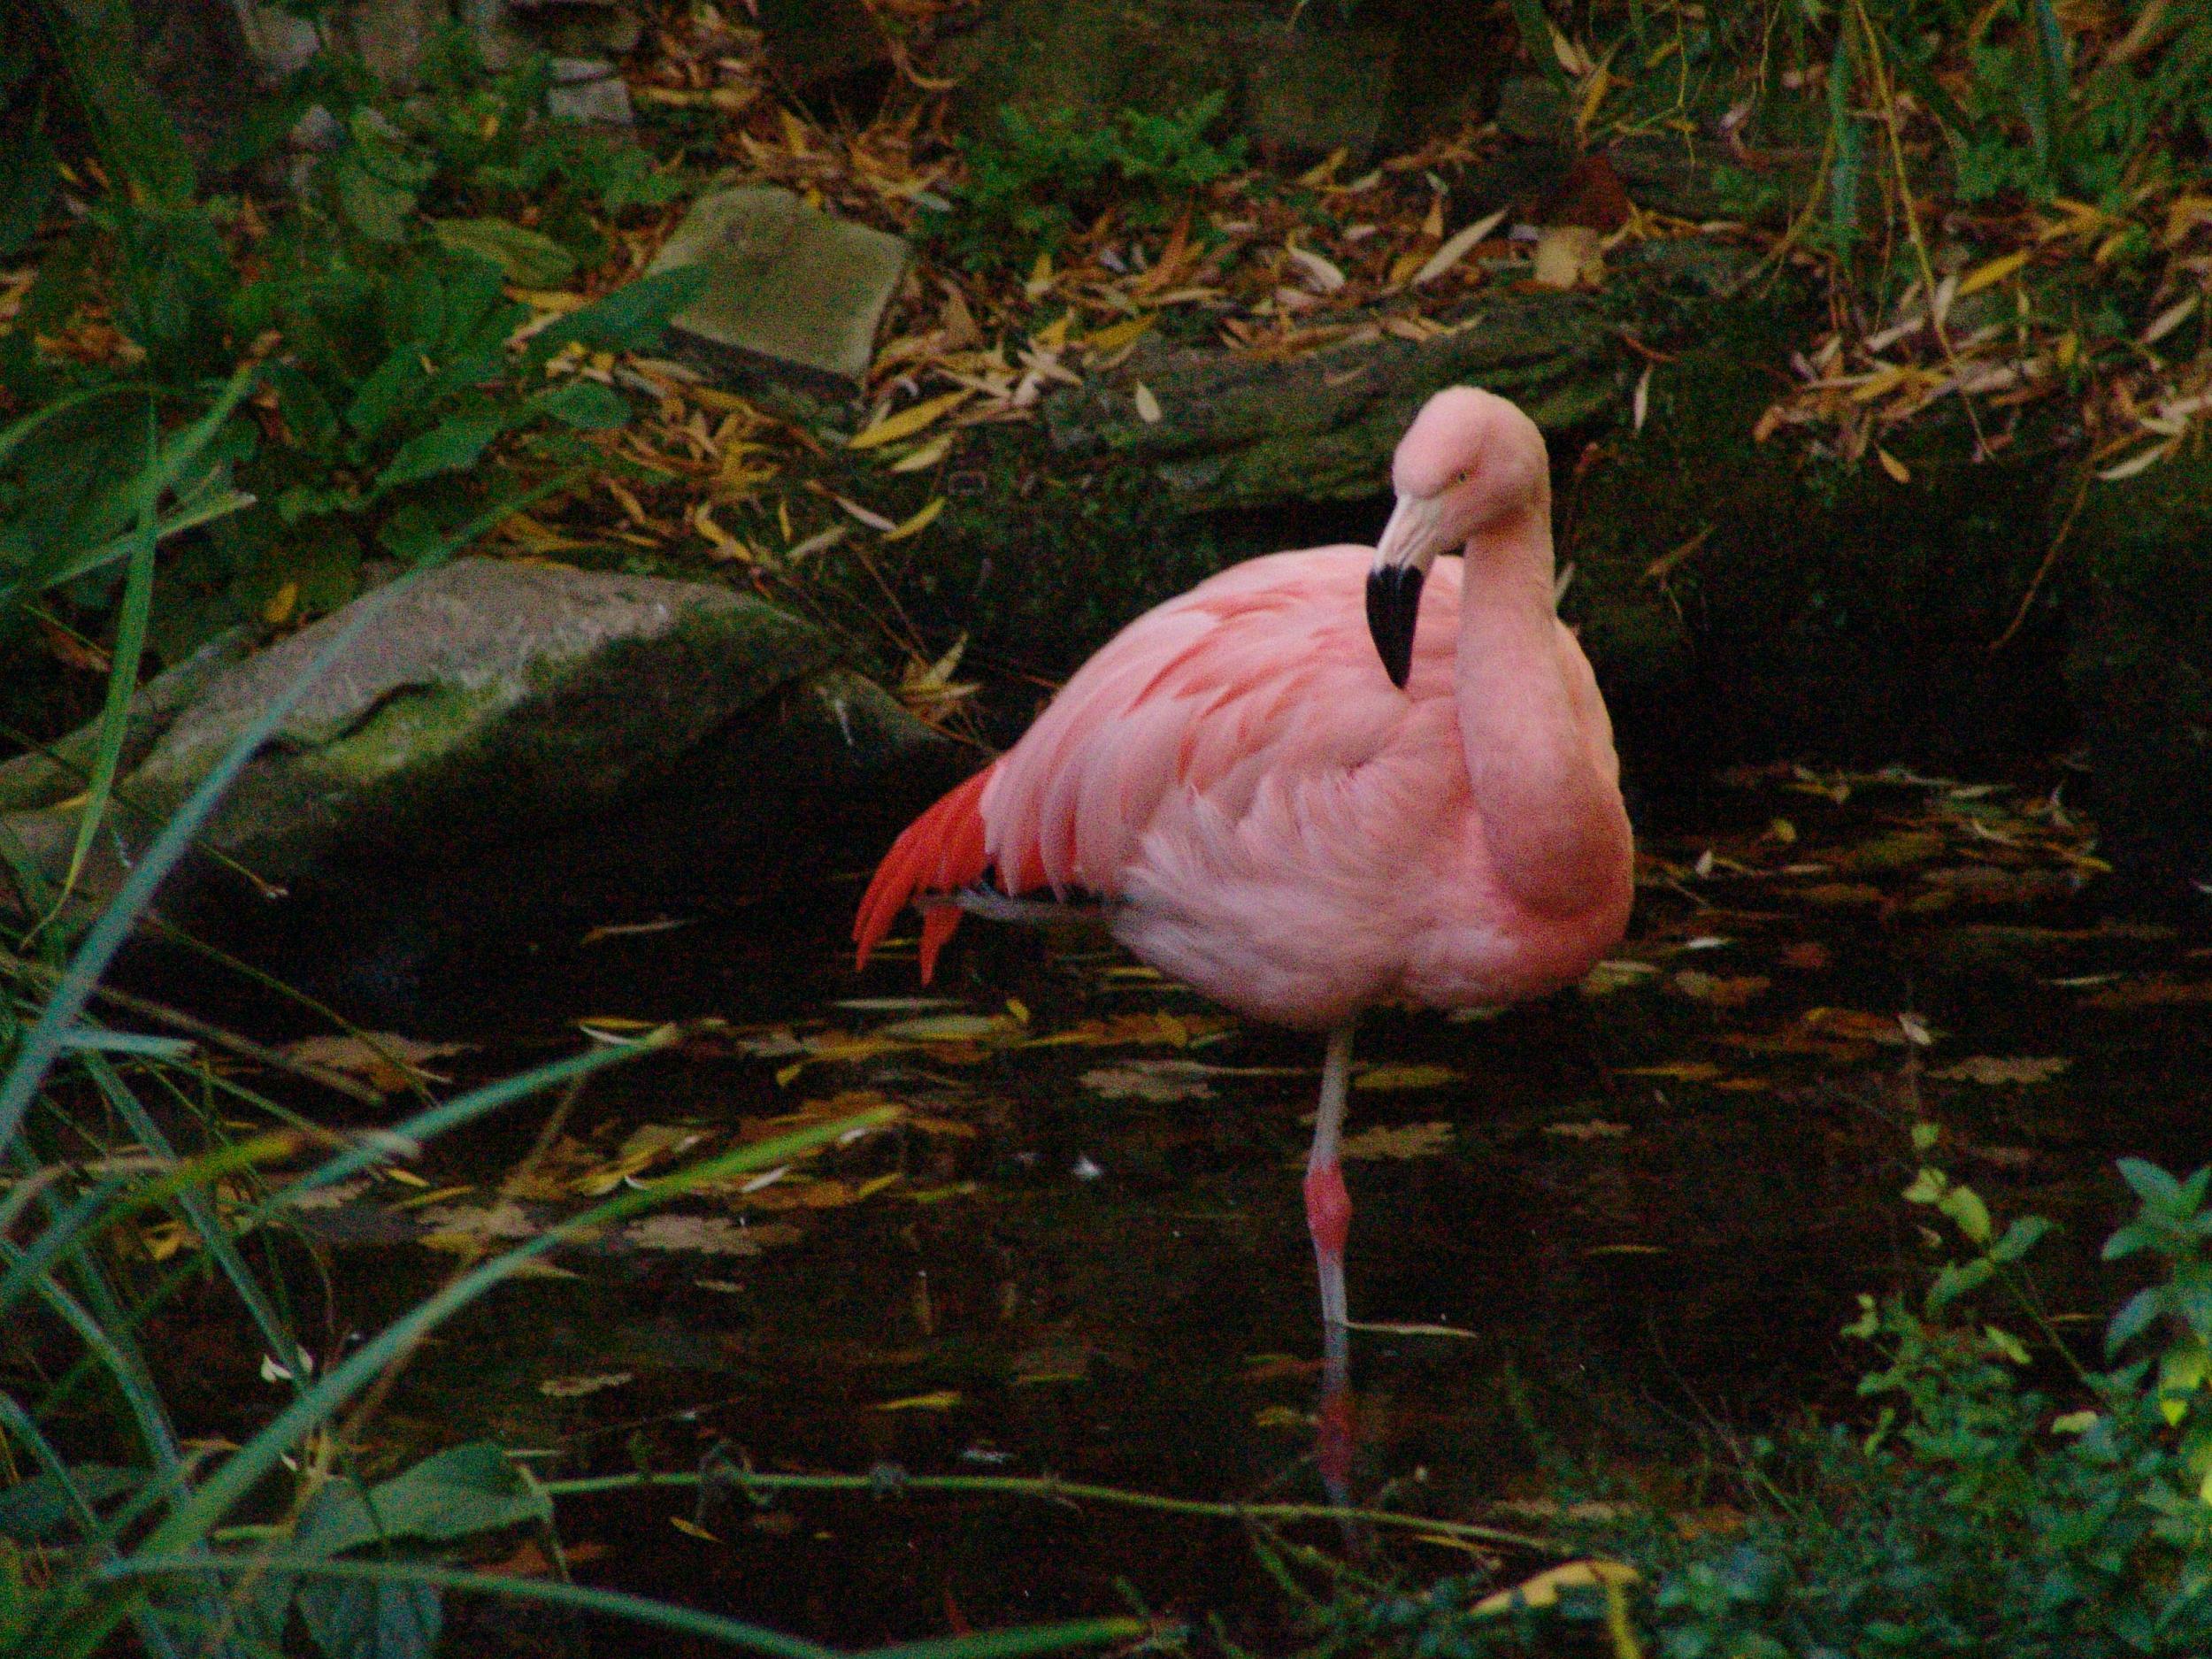 The gardens featured flamingos